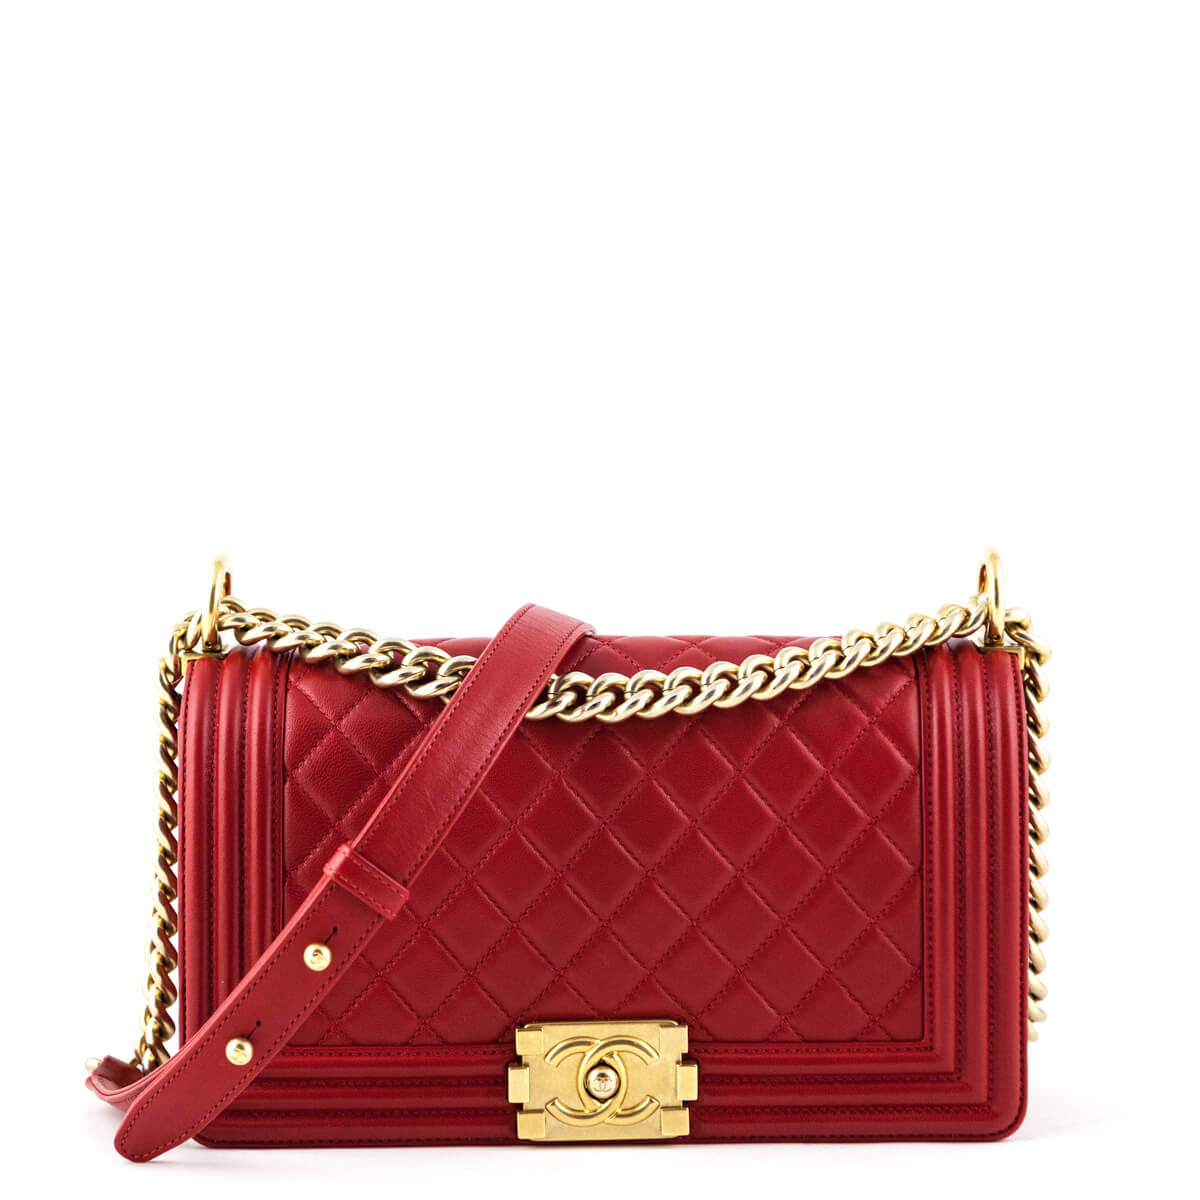 Chanel Red Quilted Calfskin Medium Boy Bag - Luxury Handbags